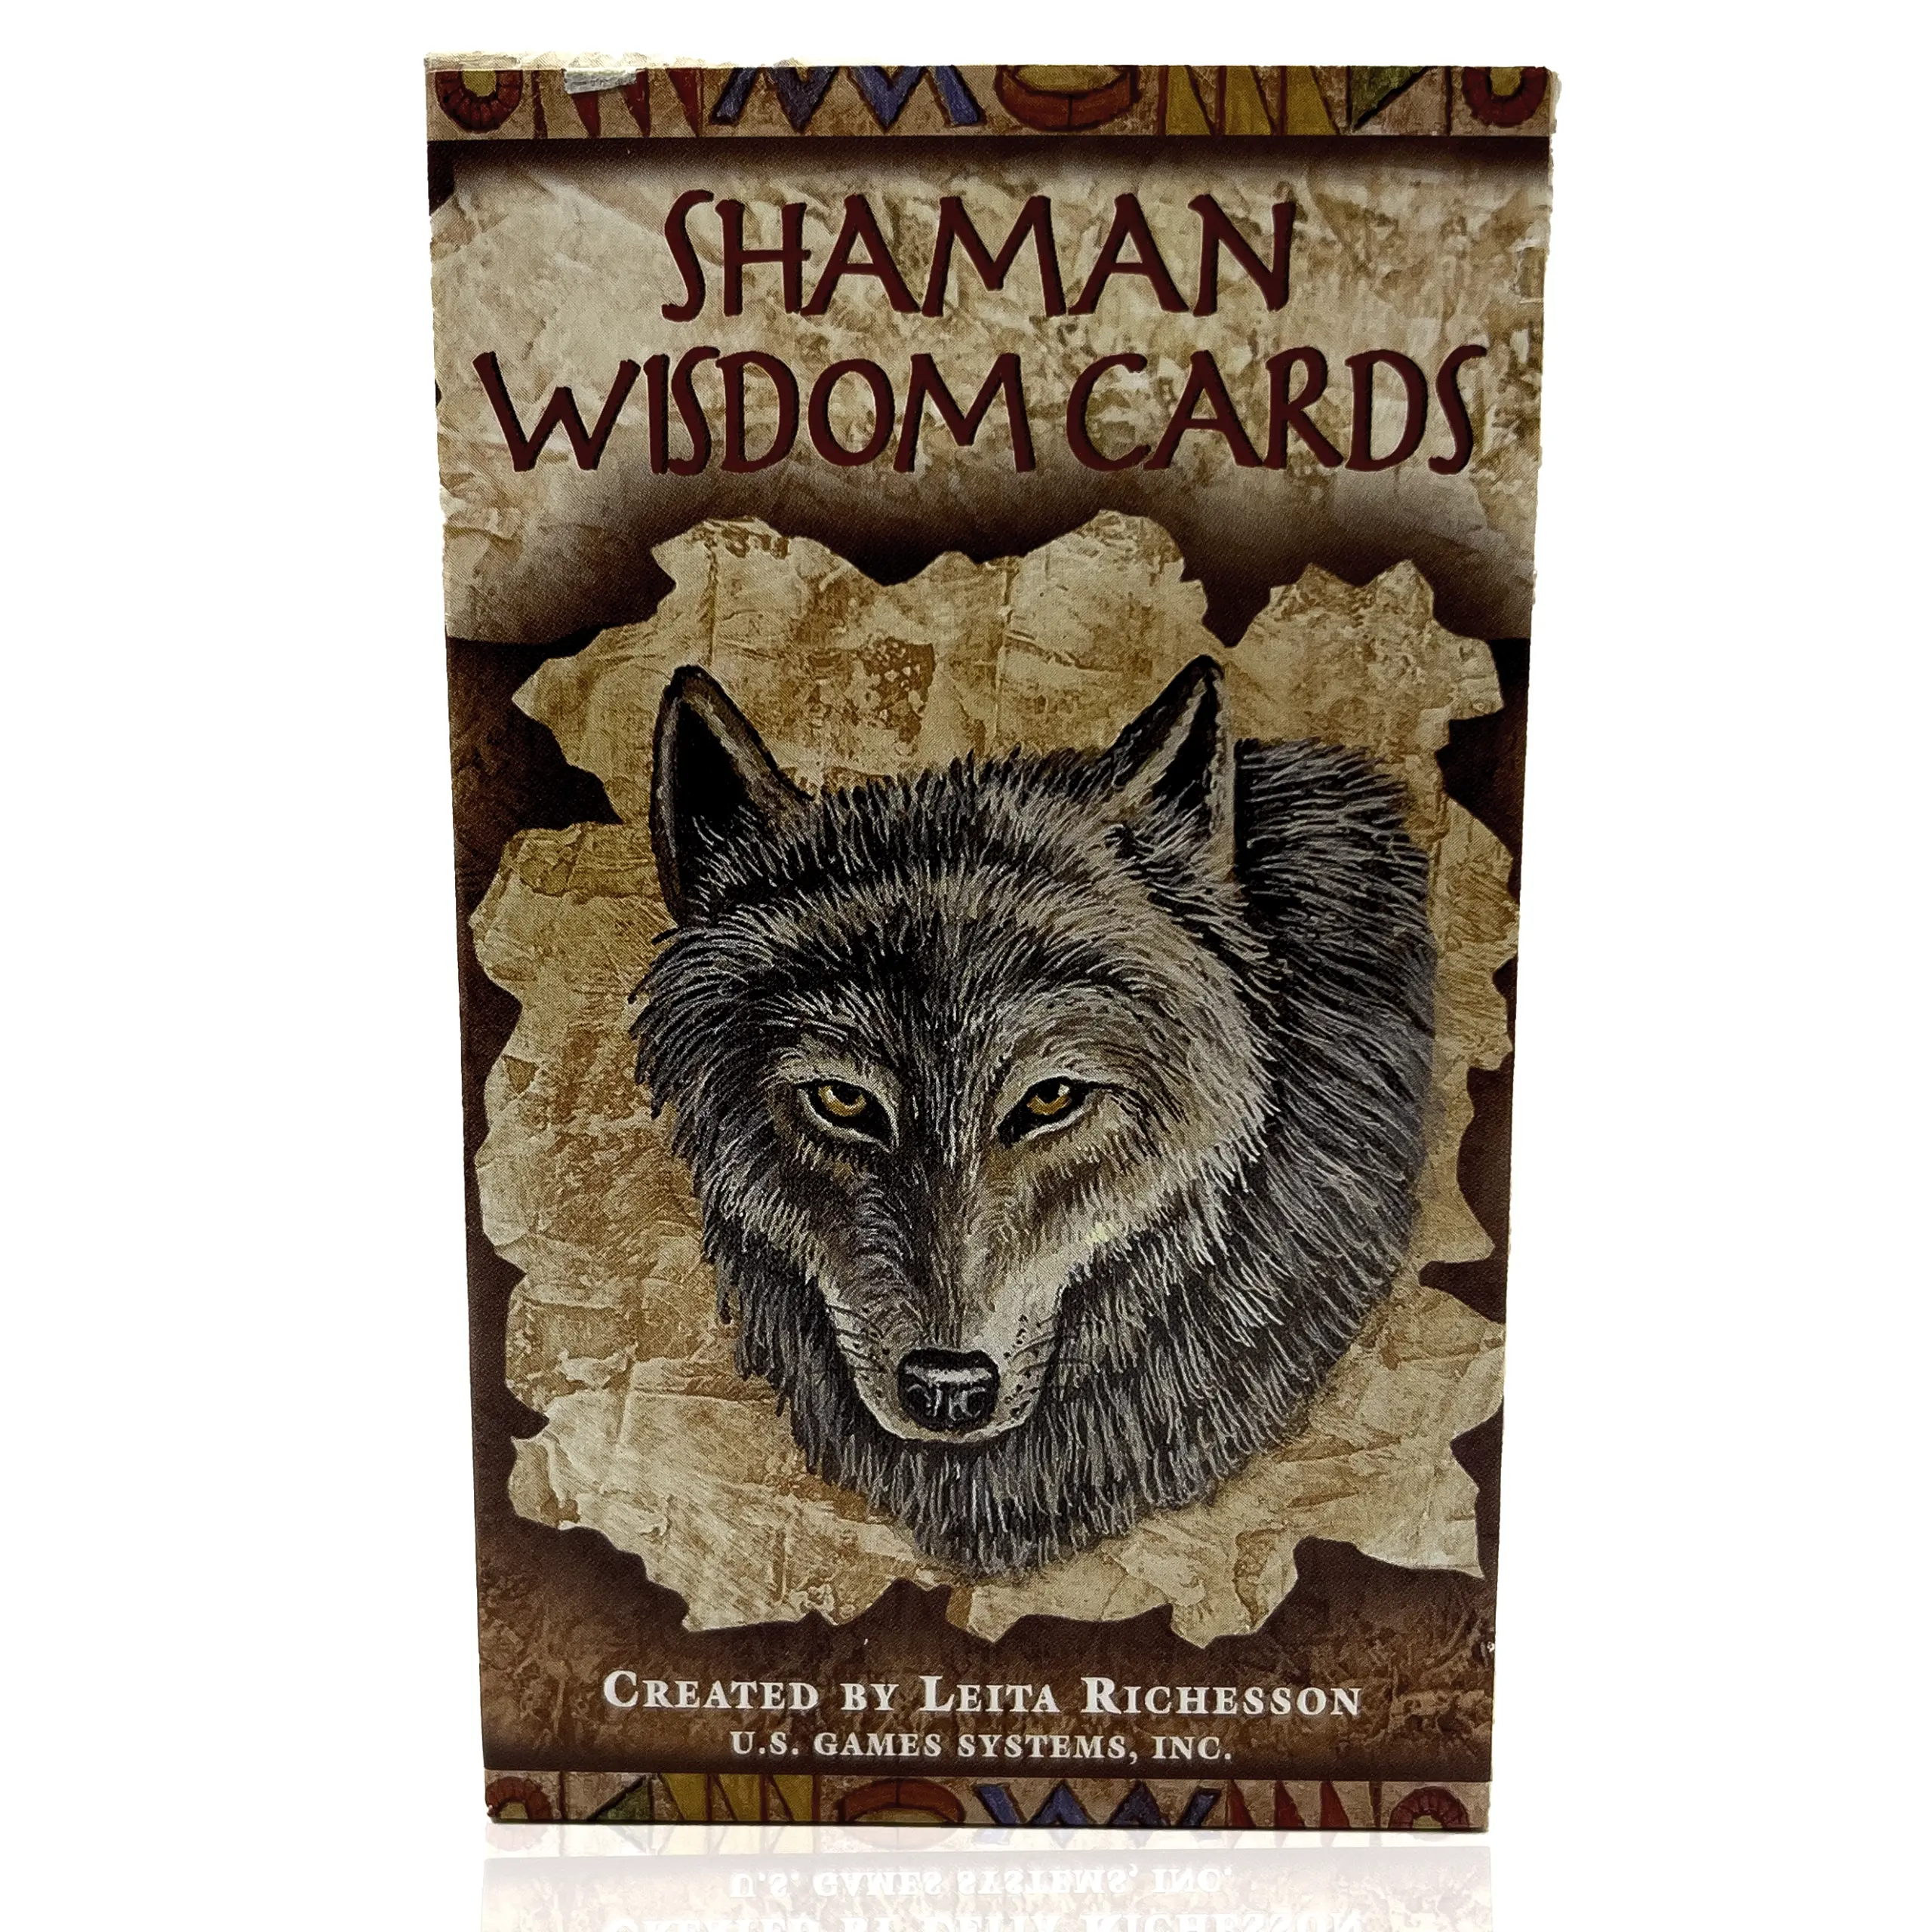 Shaman wisdom cards orakel kort